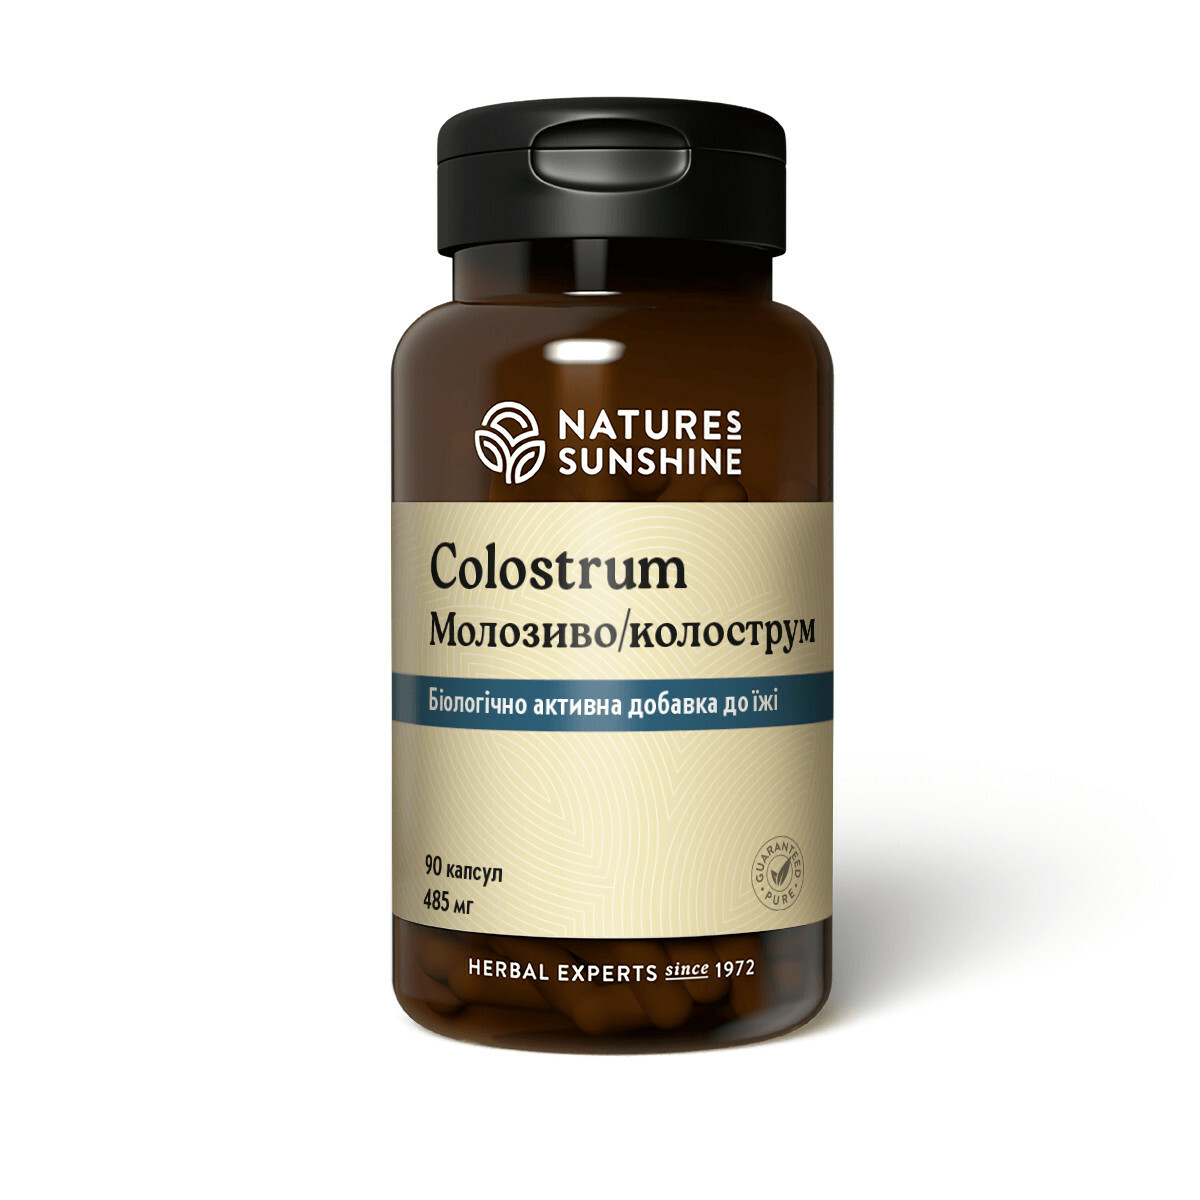 Colostrum - Колострум - БАД Nature's Sunshine Products (NSP)